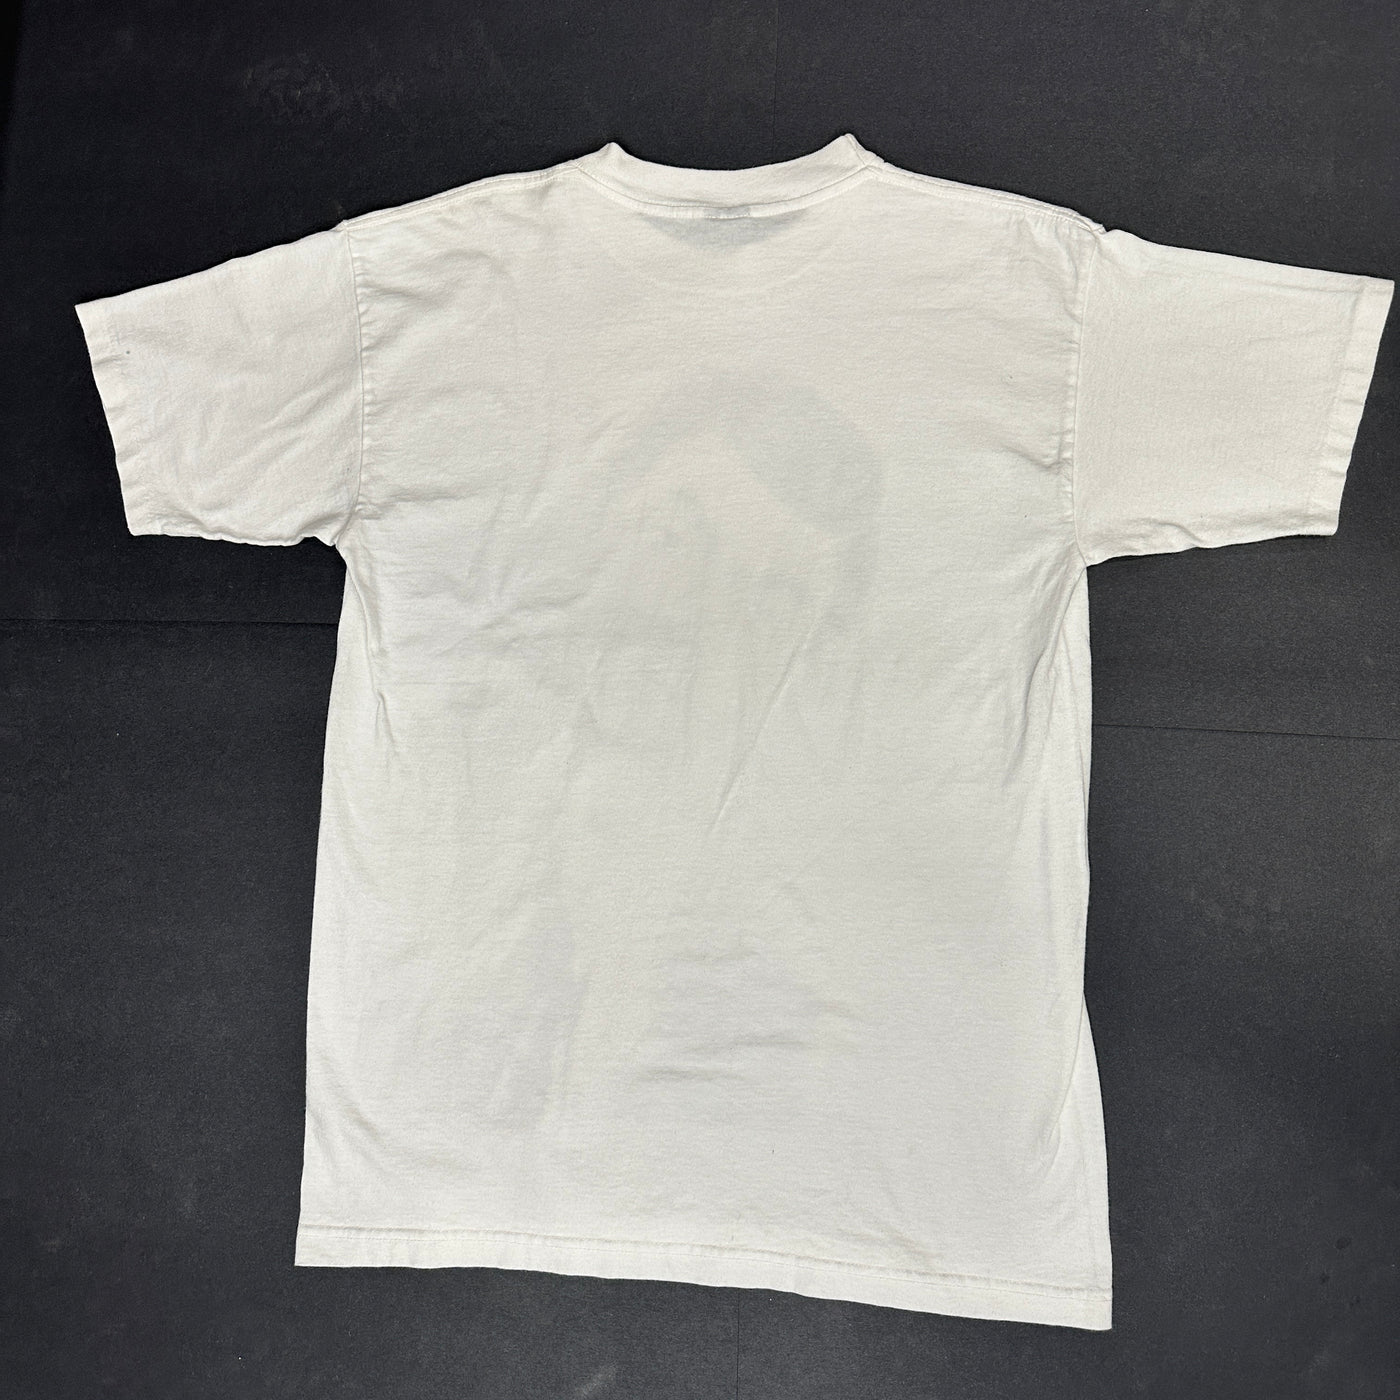 '96 Mr Bean Rowan Atkinson T-shirt sz M